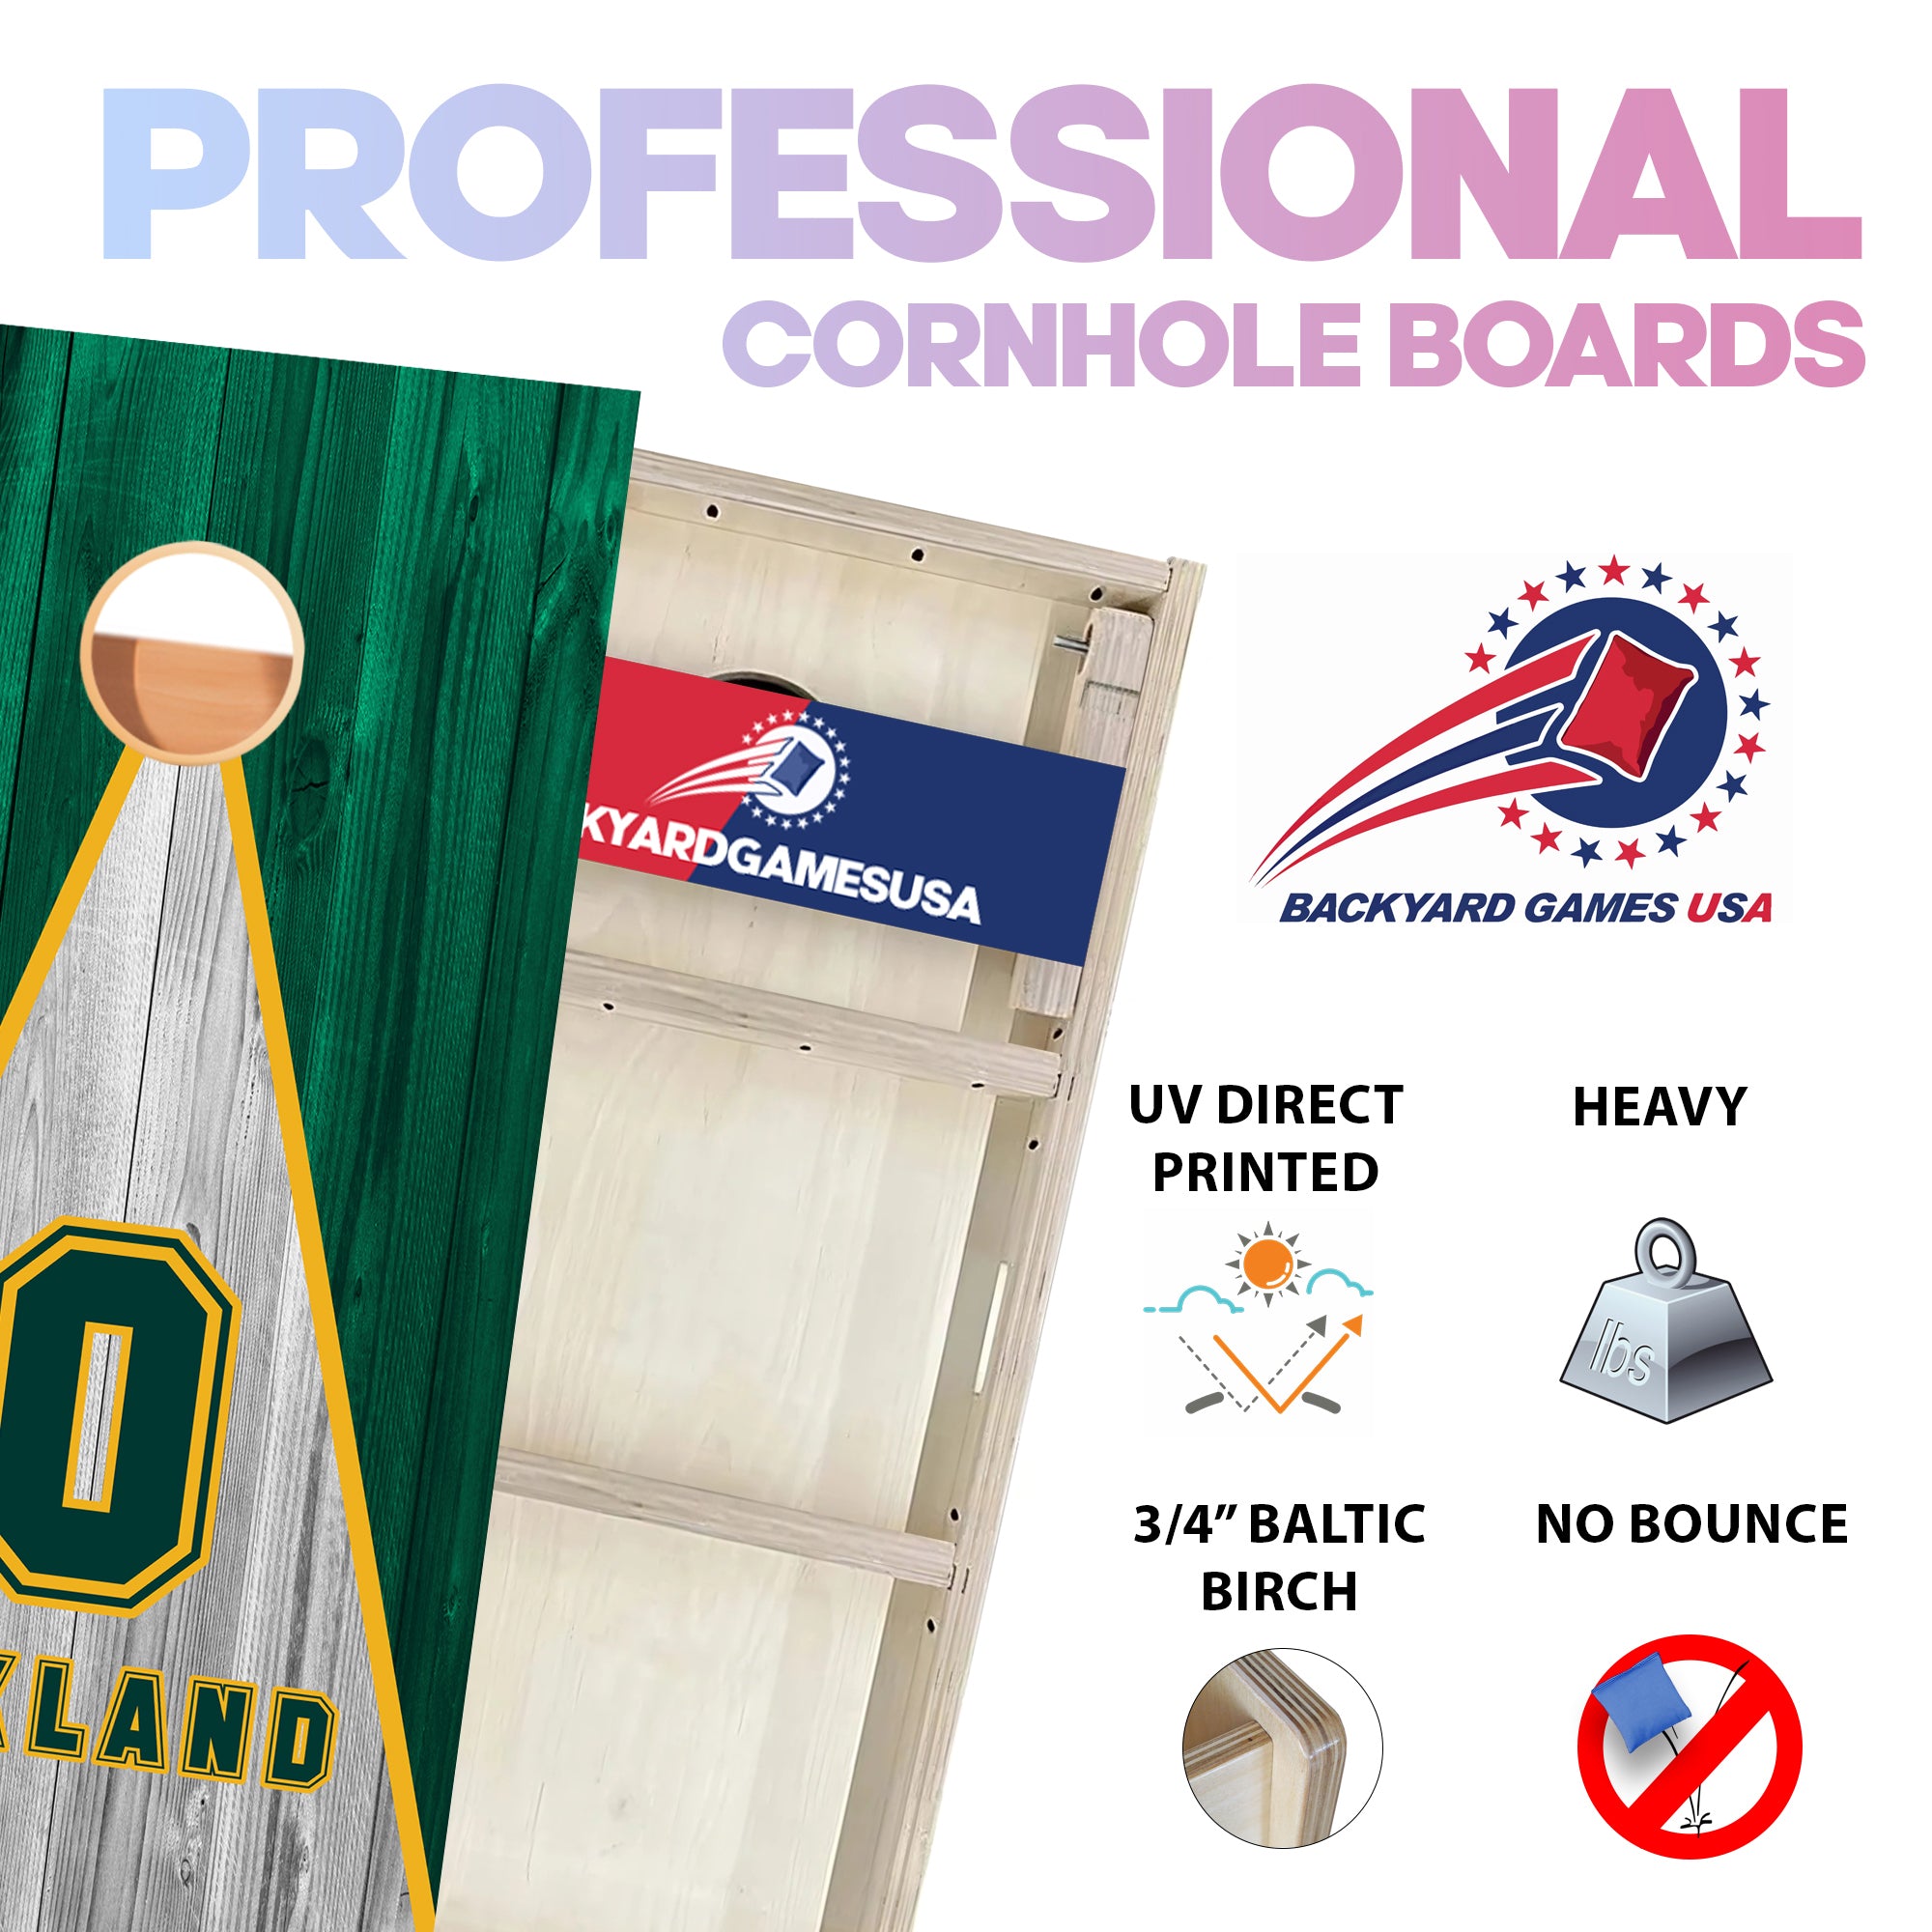 Oakland Baseball Professional Cornhole Boards